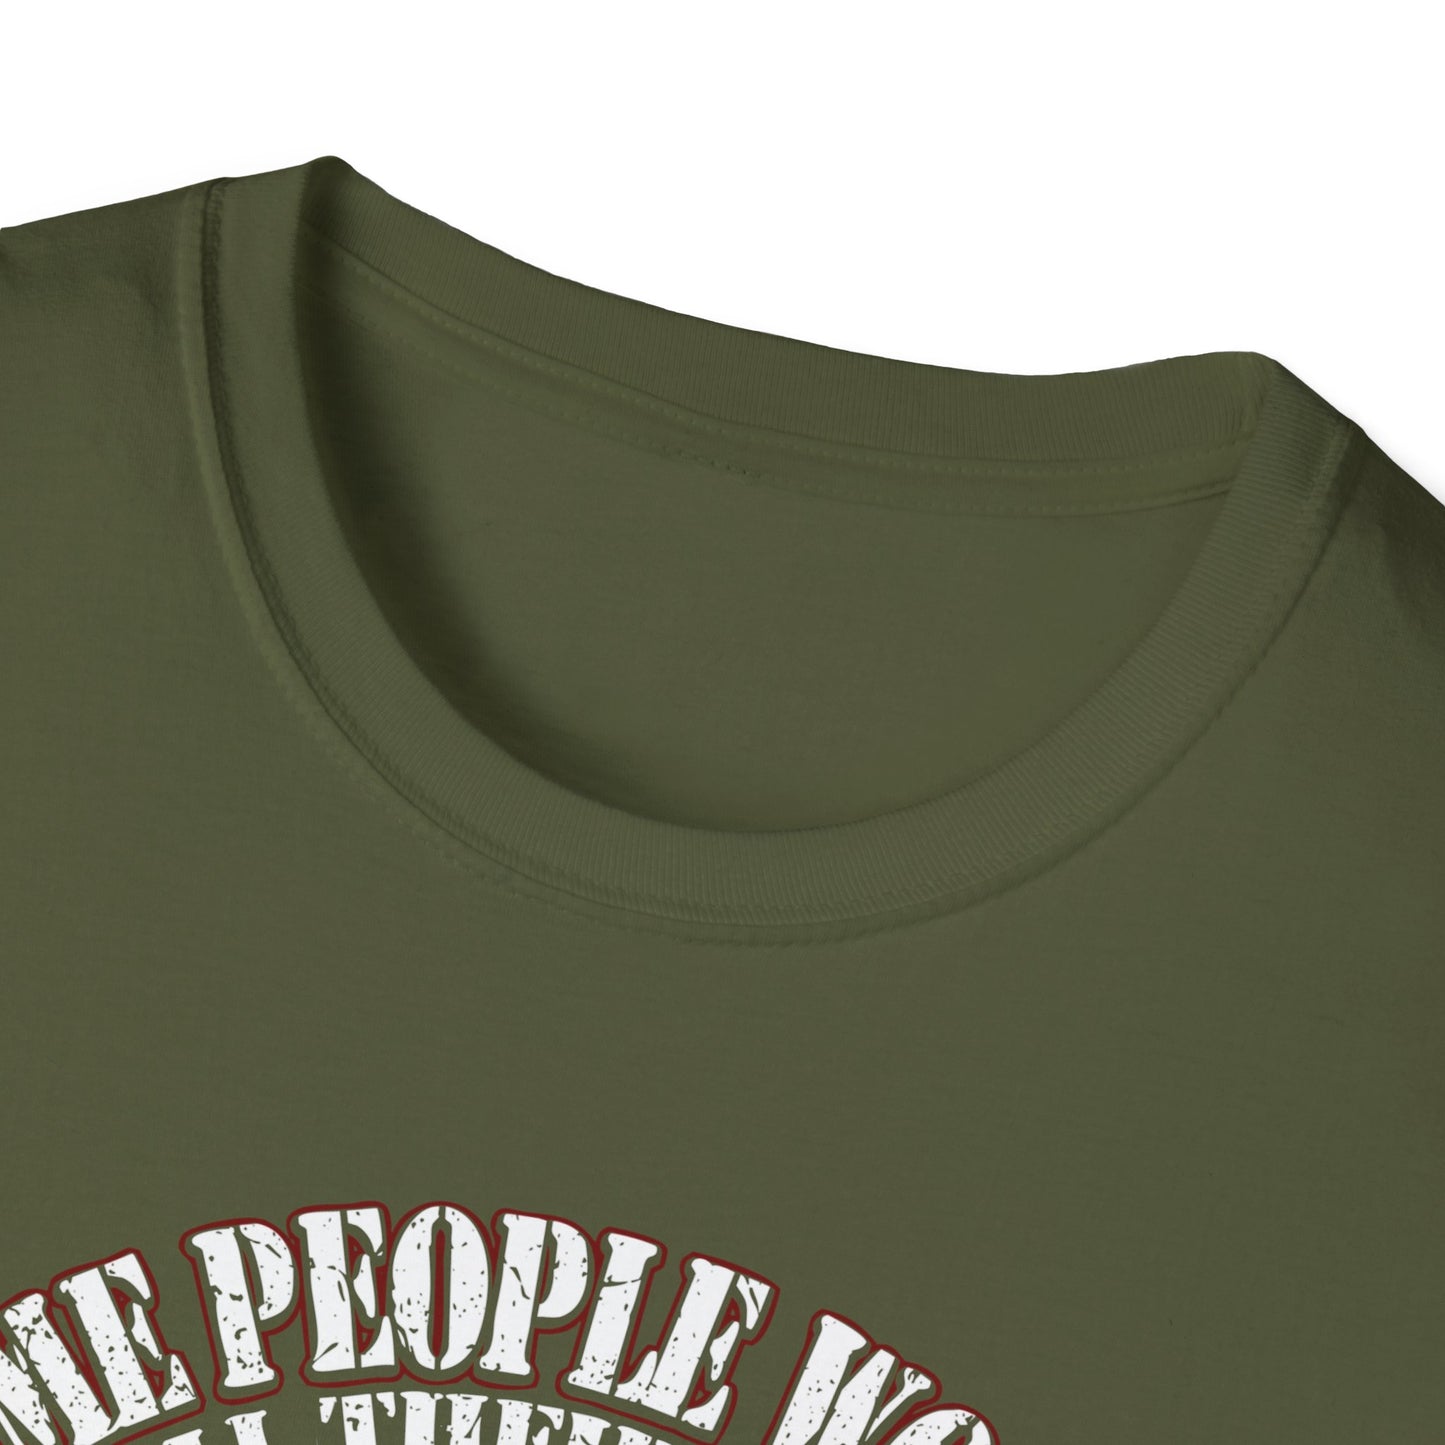 Some People Wonder - Unisex Softstyle T-Shirt